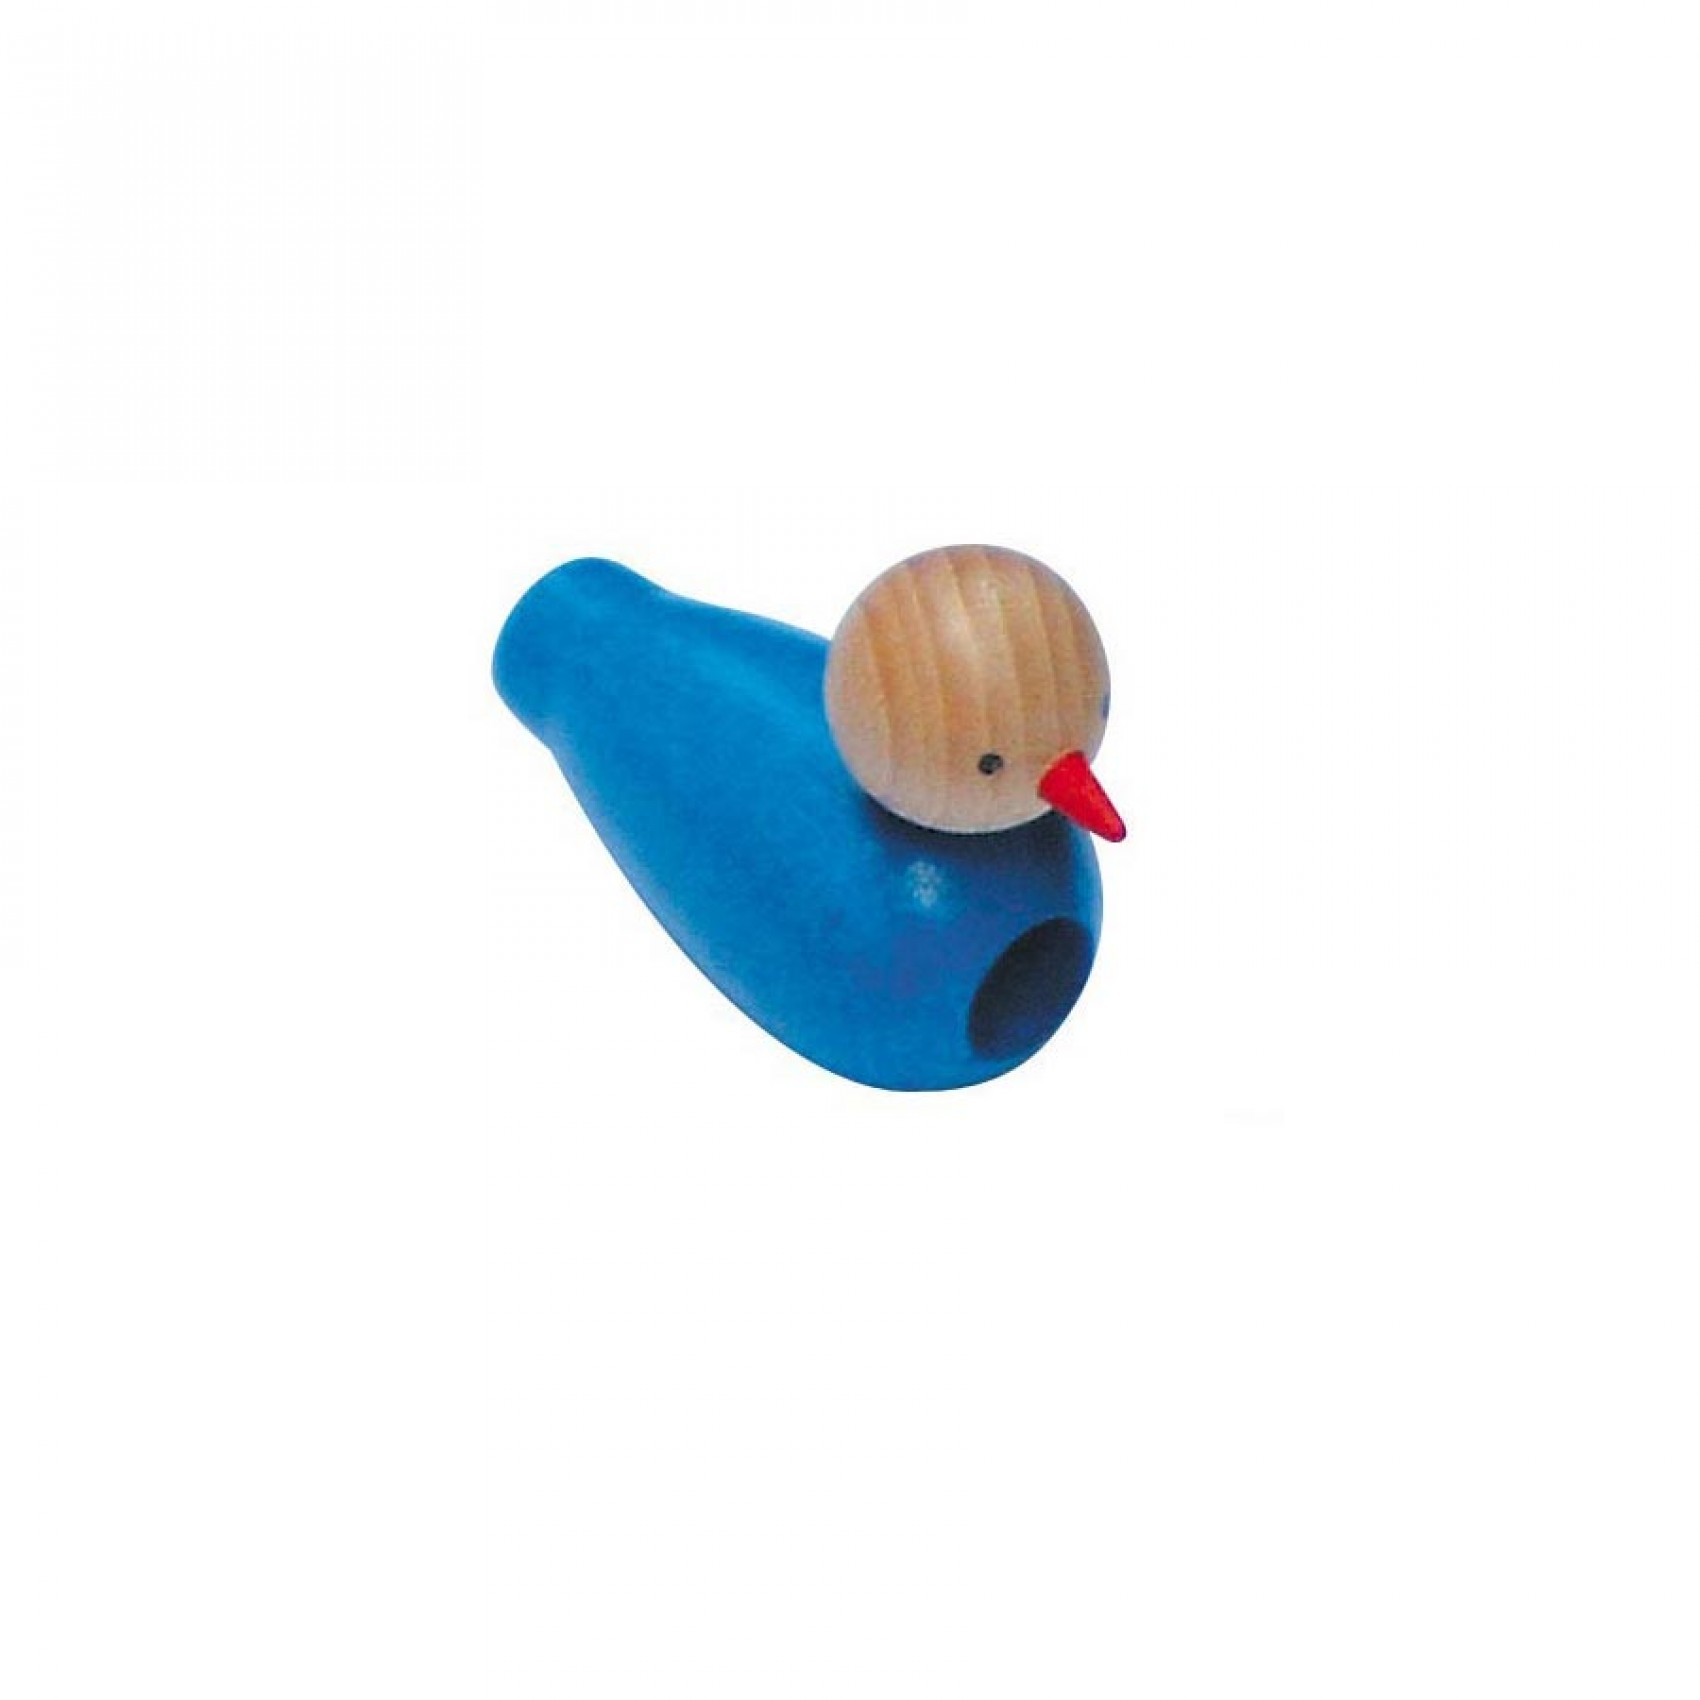 Oiseau en bois siffleur bleu - Artisan du Jura